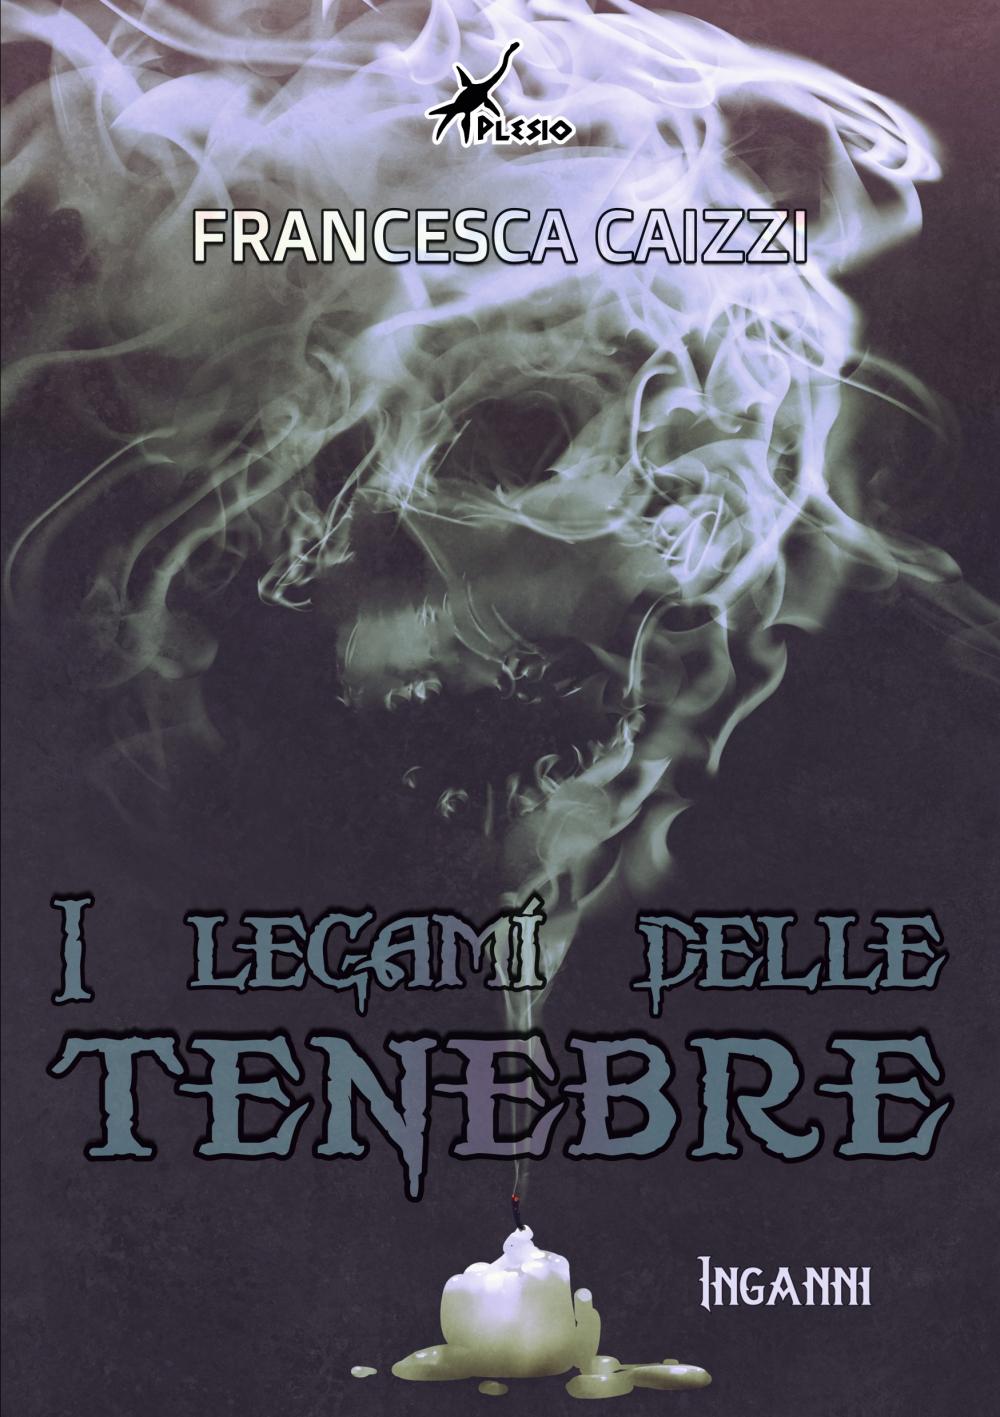 //www.francescacaizzi.it/wp-content/uploads/2020/12/I-legami-delle-tenebre-Inganni-Francesca-Caizzi-Plesio-Editore.jpg